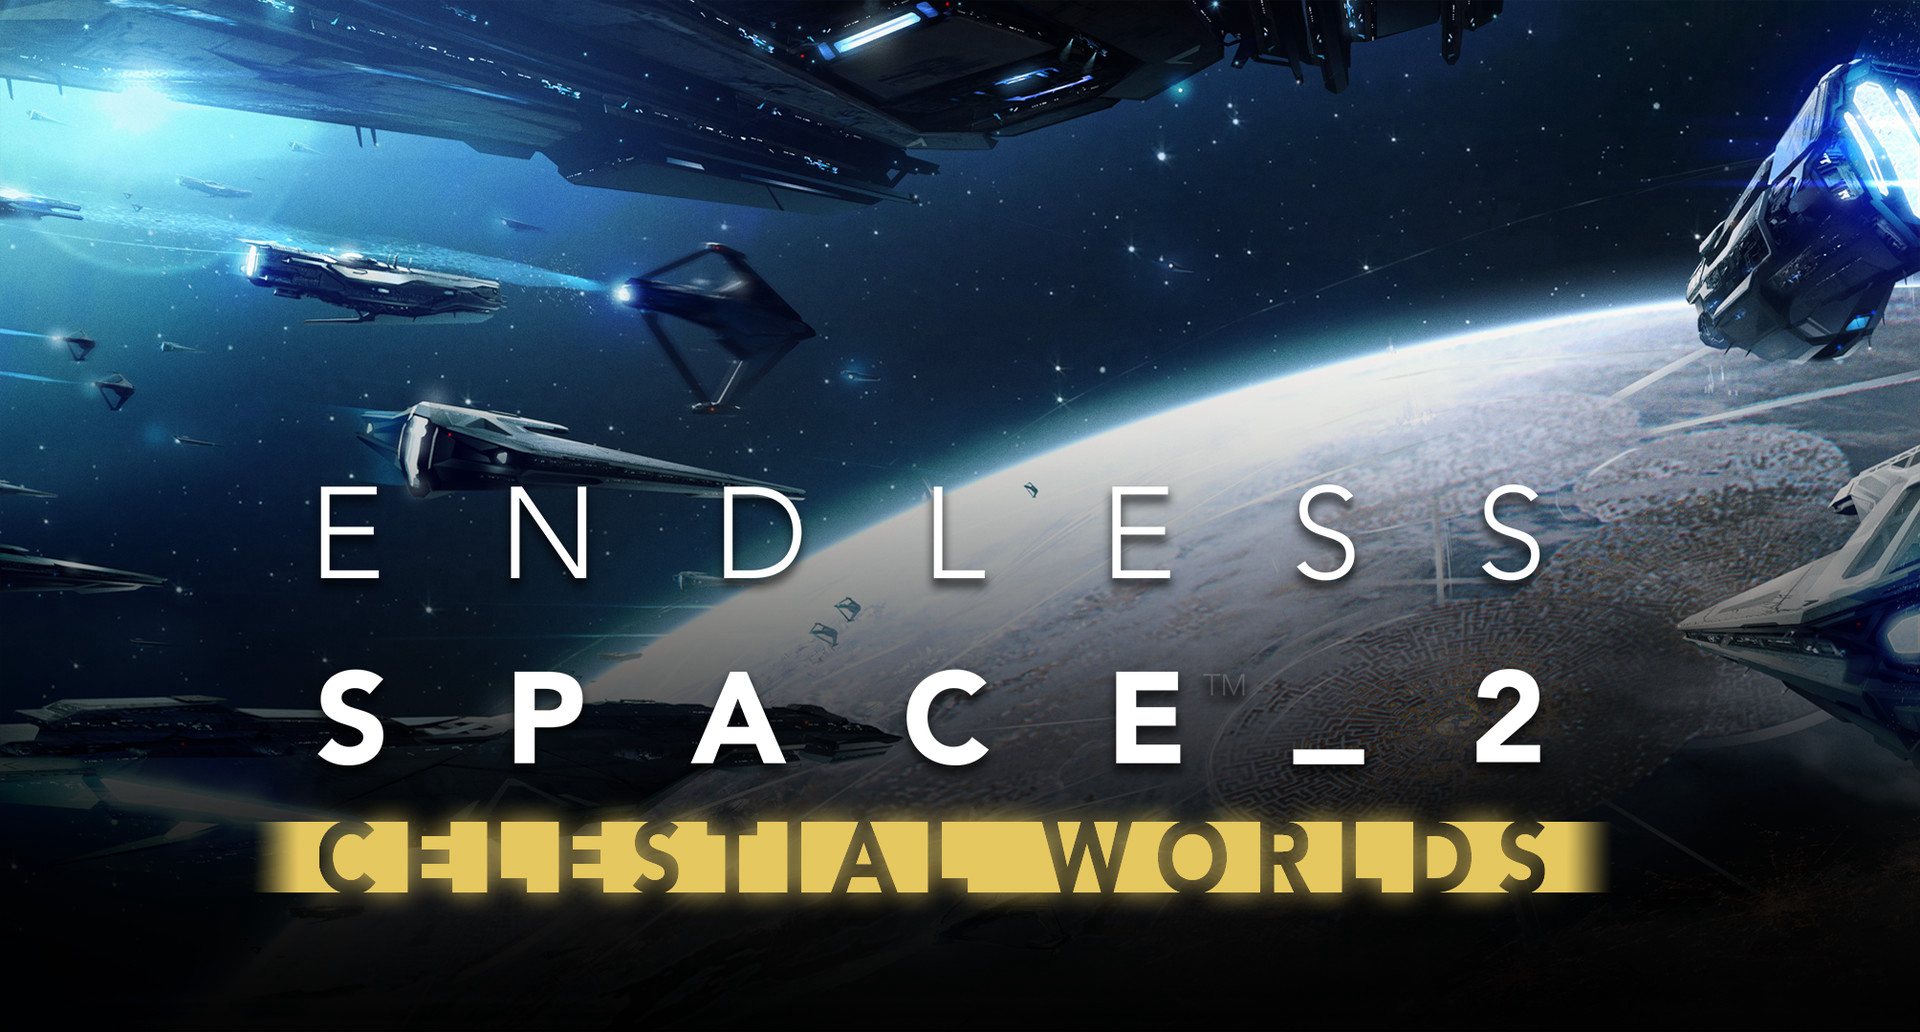 [$ 2.2] Endless Space 2 - Celestial Worlds DLC Steam CD Key